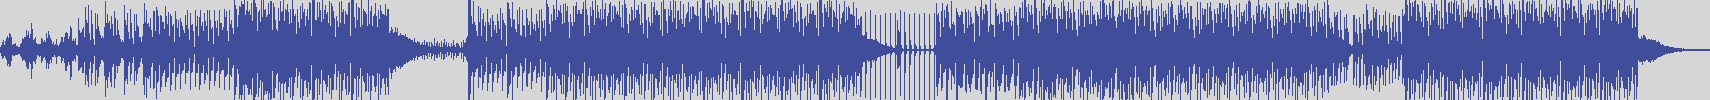 nf_boyz_records [NFY089] Samuel Grand - Wolves [Deep Floor Mix] audio wave form